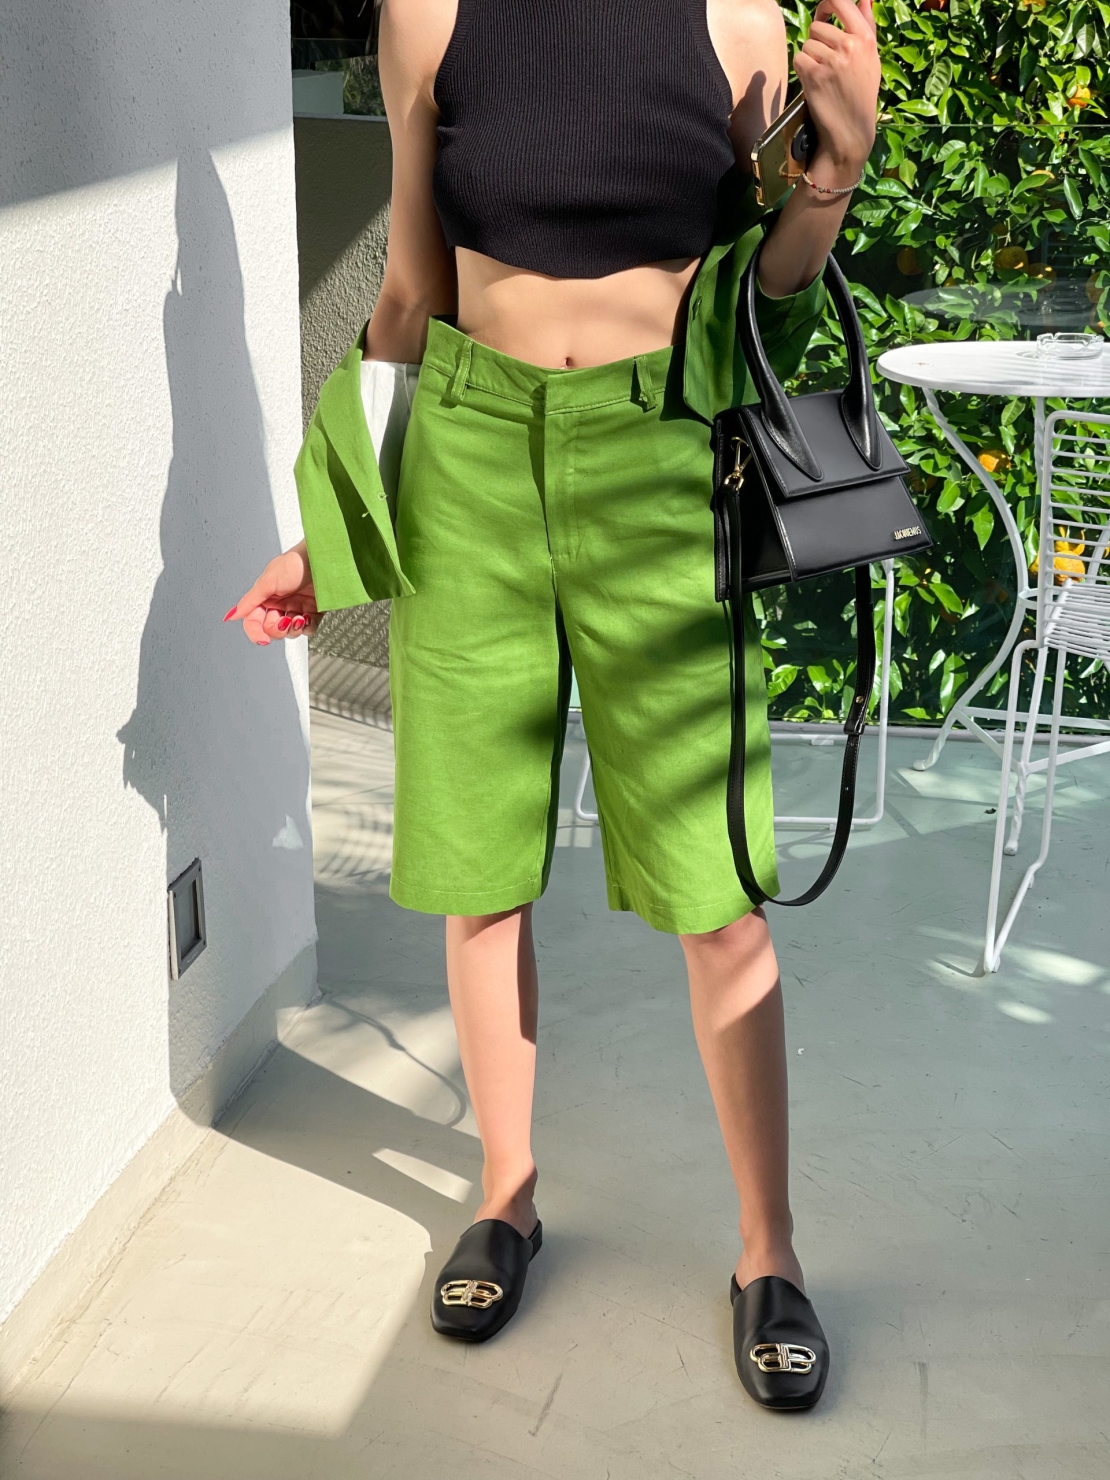 Pastel green shorts